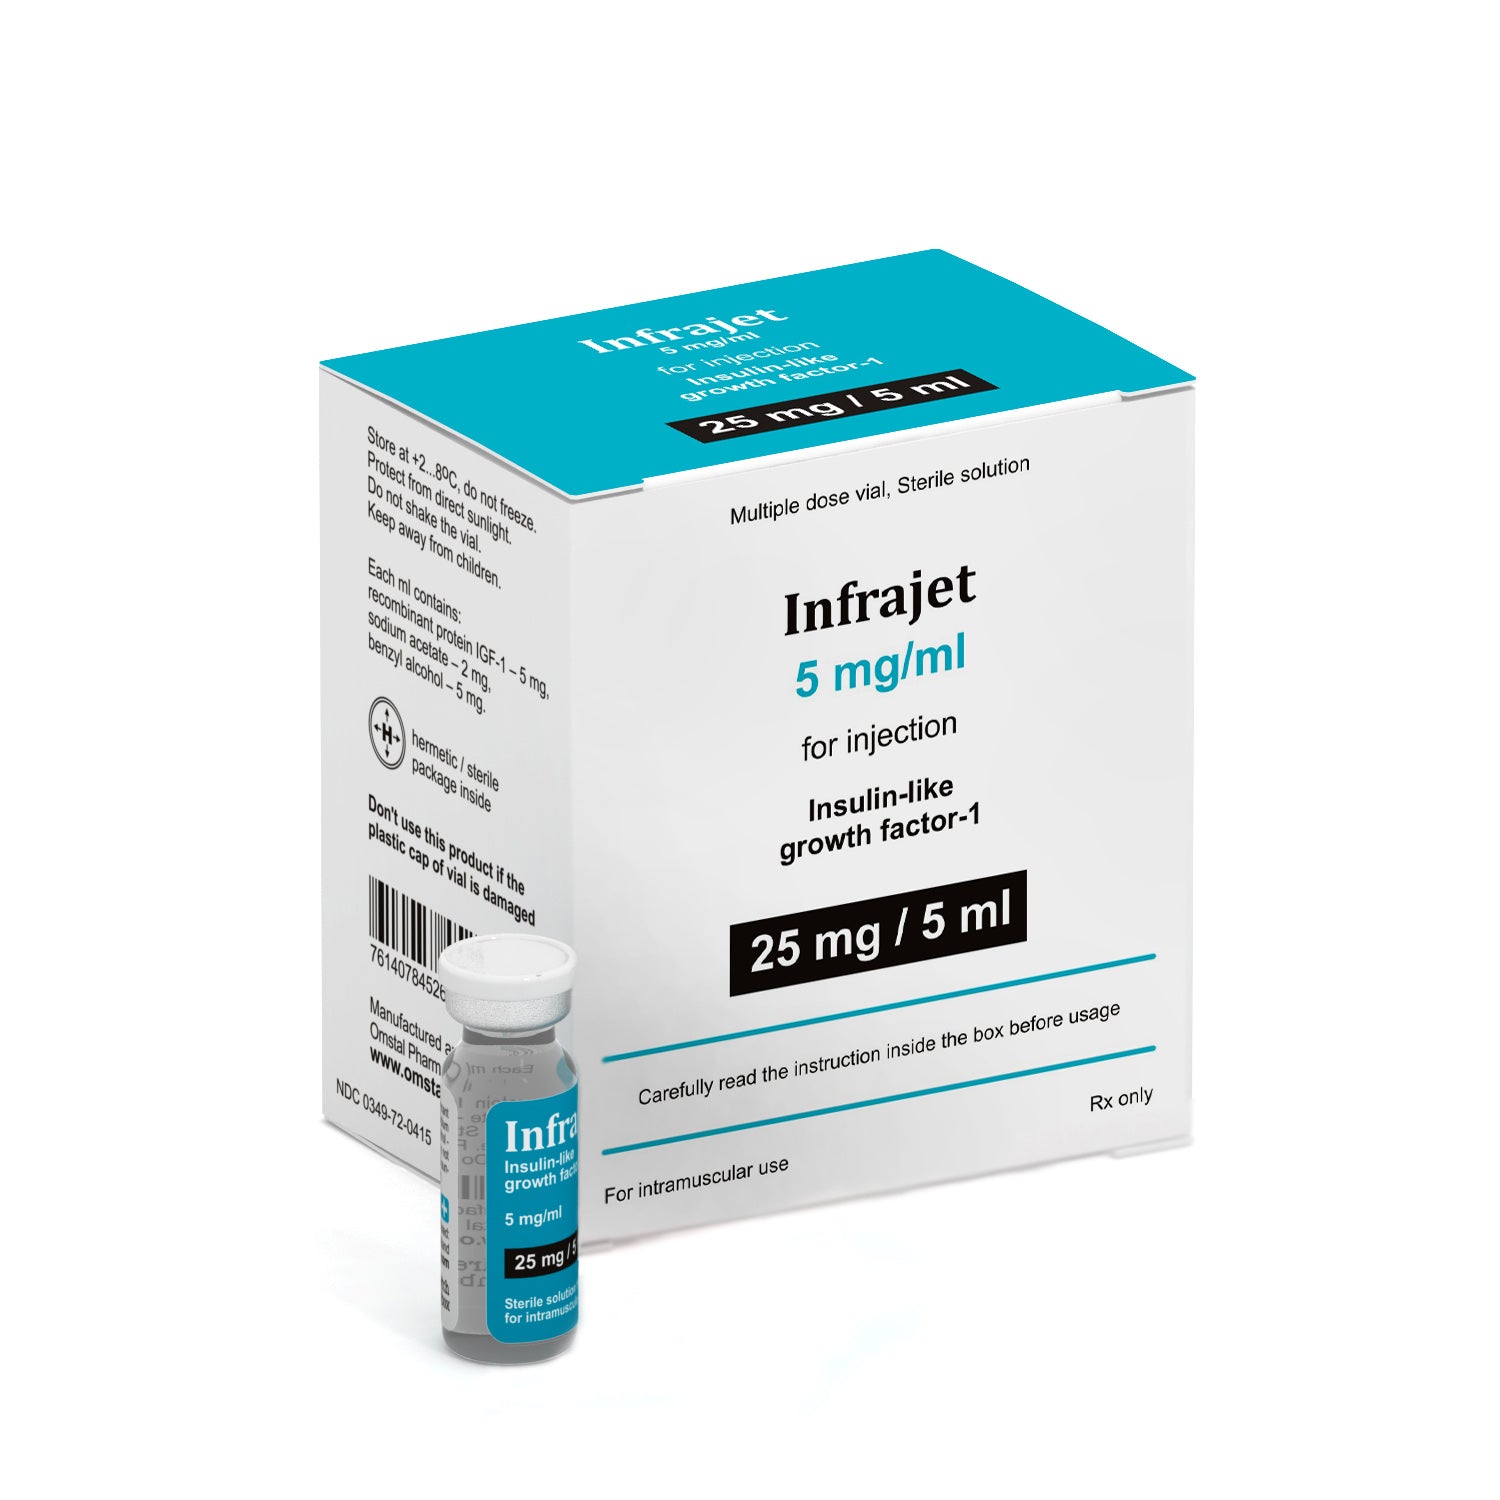 Omstal Pharma Infrajet (IGF-1) 1x5ml/25mg kit front packaging.